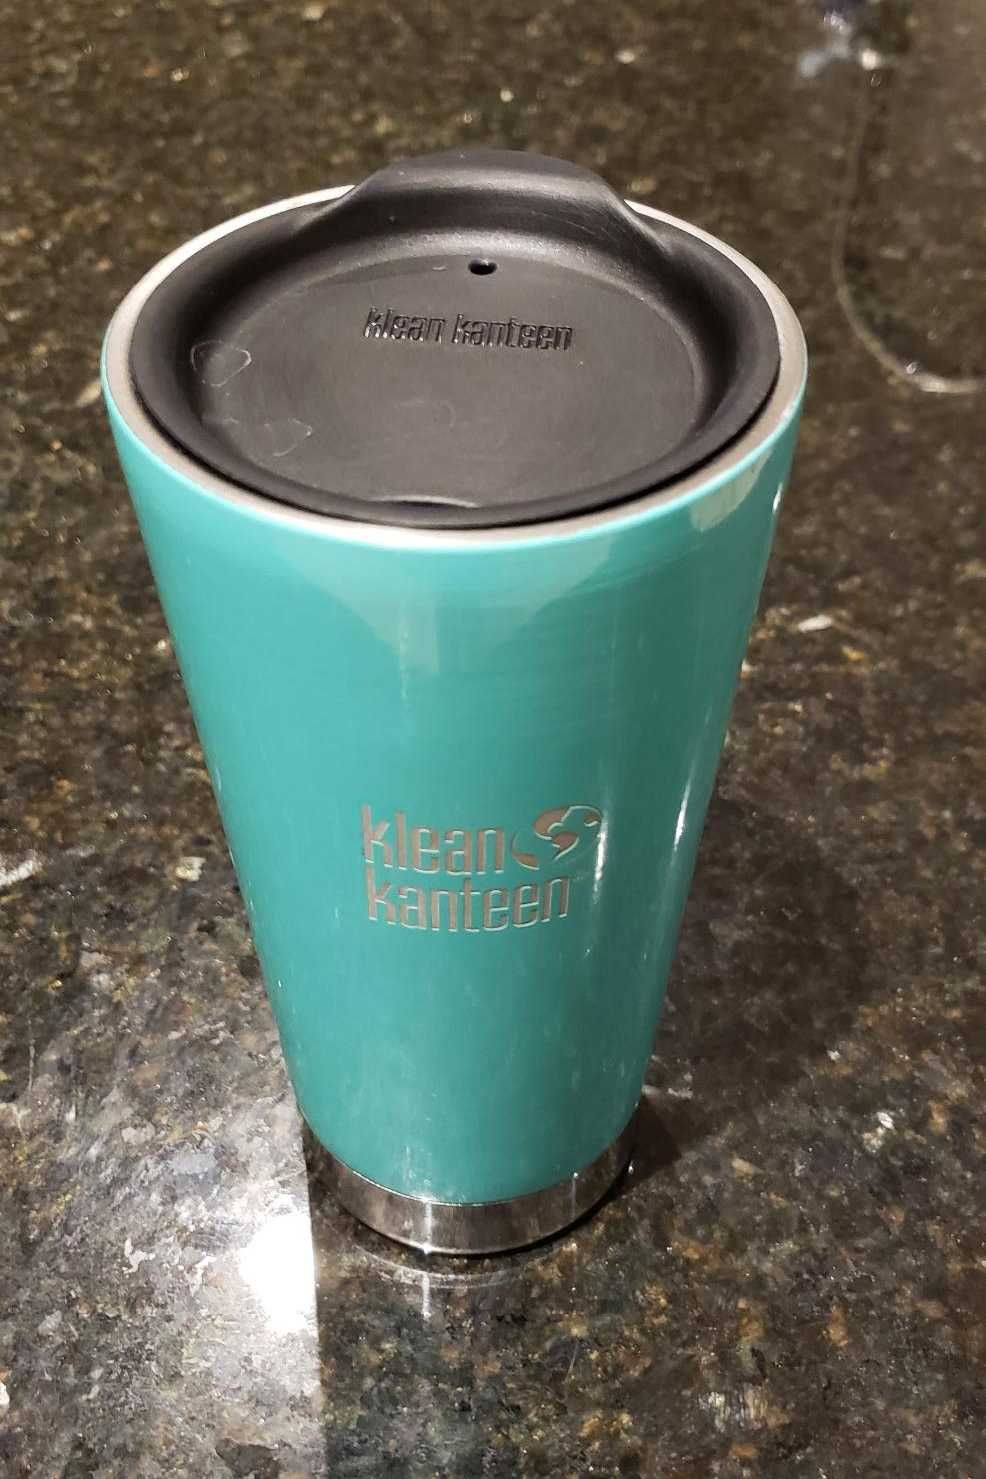 Термокружка Klean Kanteen Insulated Tumbler Cup (термос)